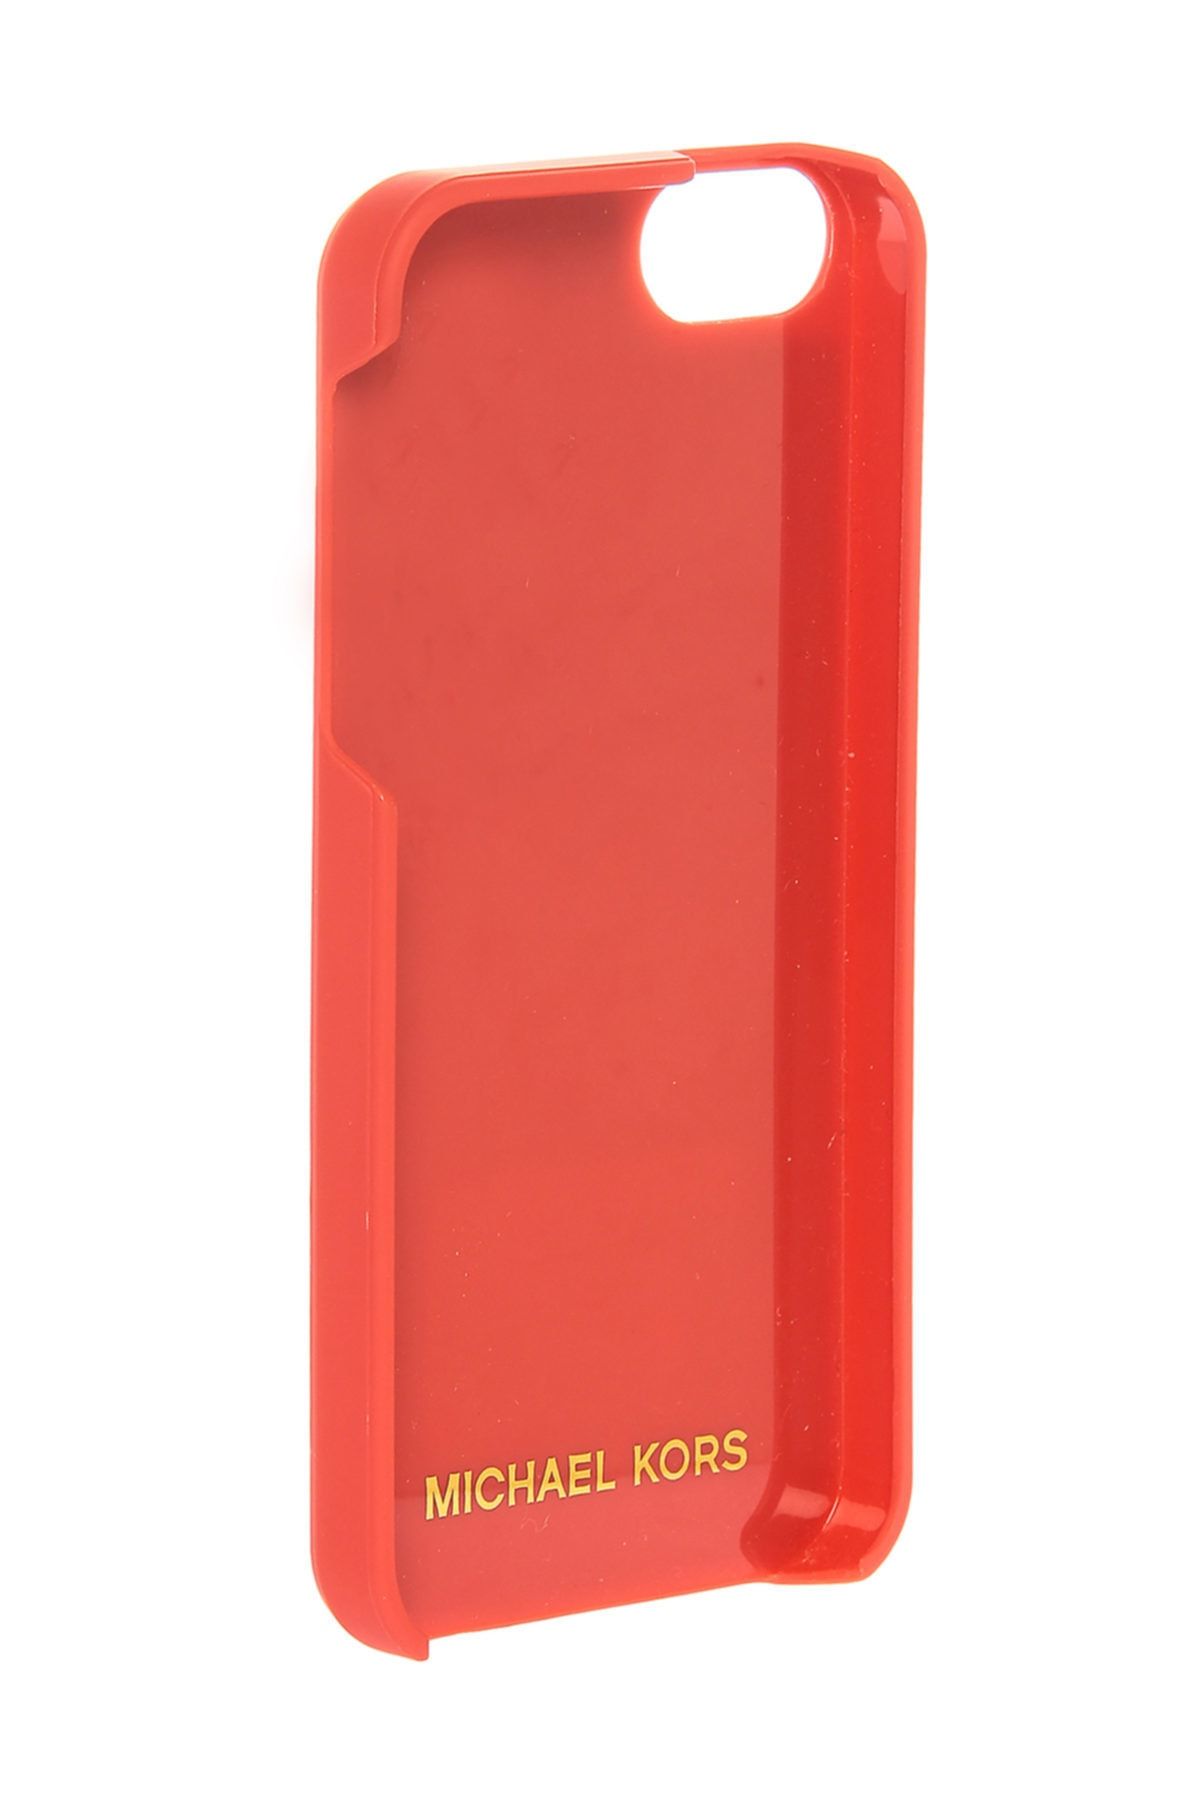 Michael Kors Mıchael Michael Kors Iphone 5 / 5s Kılıfı